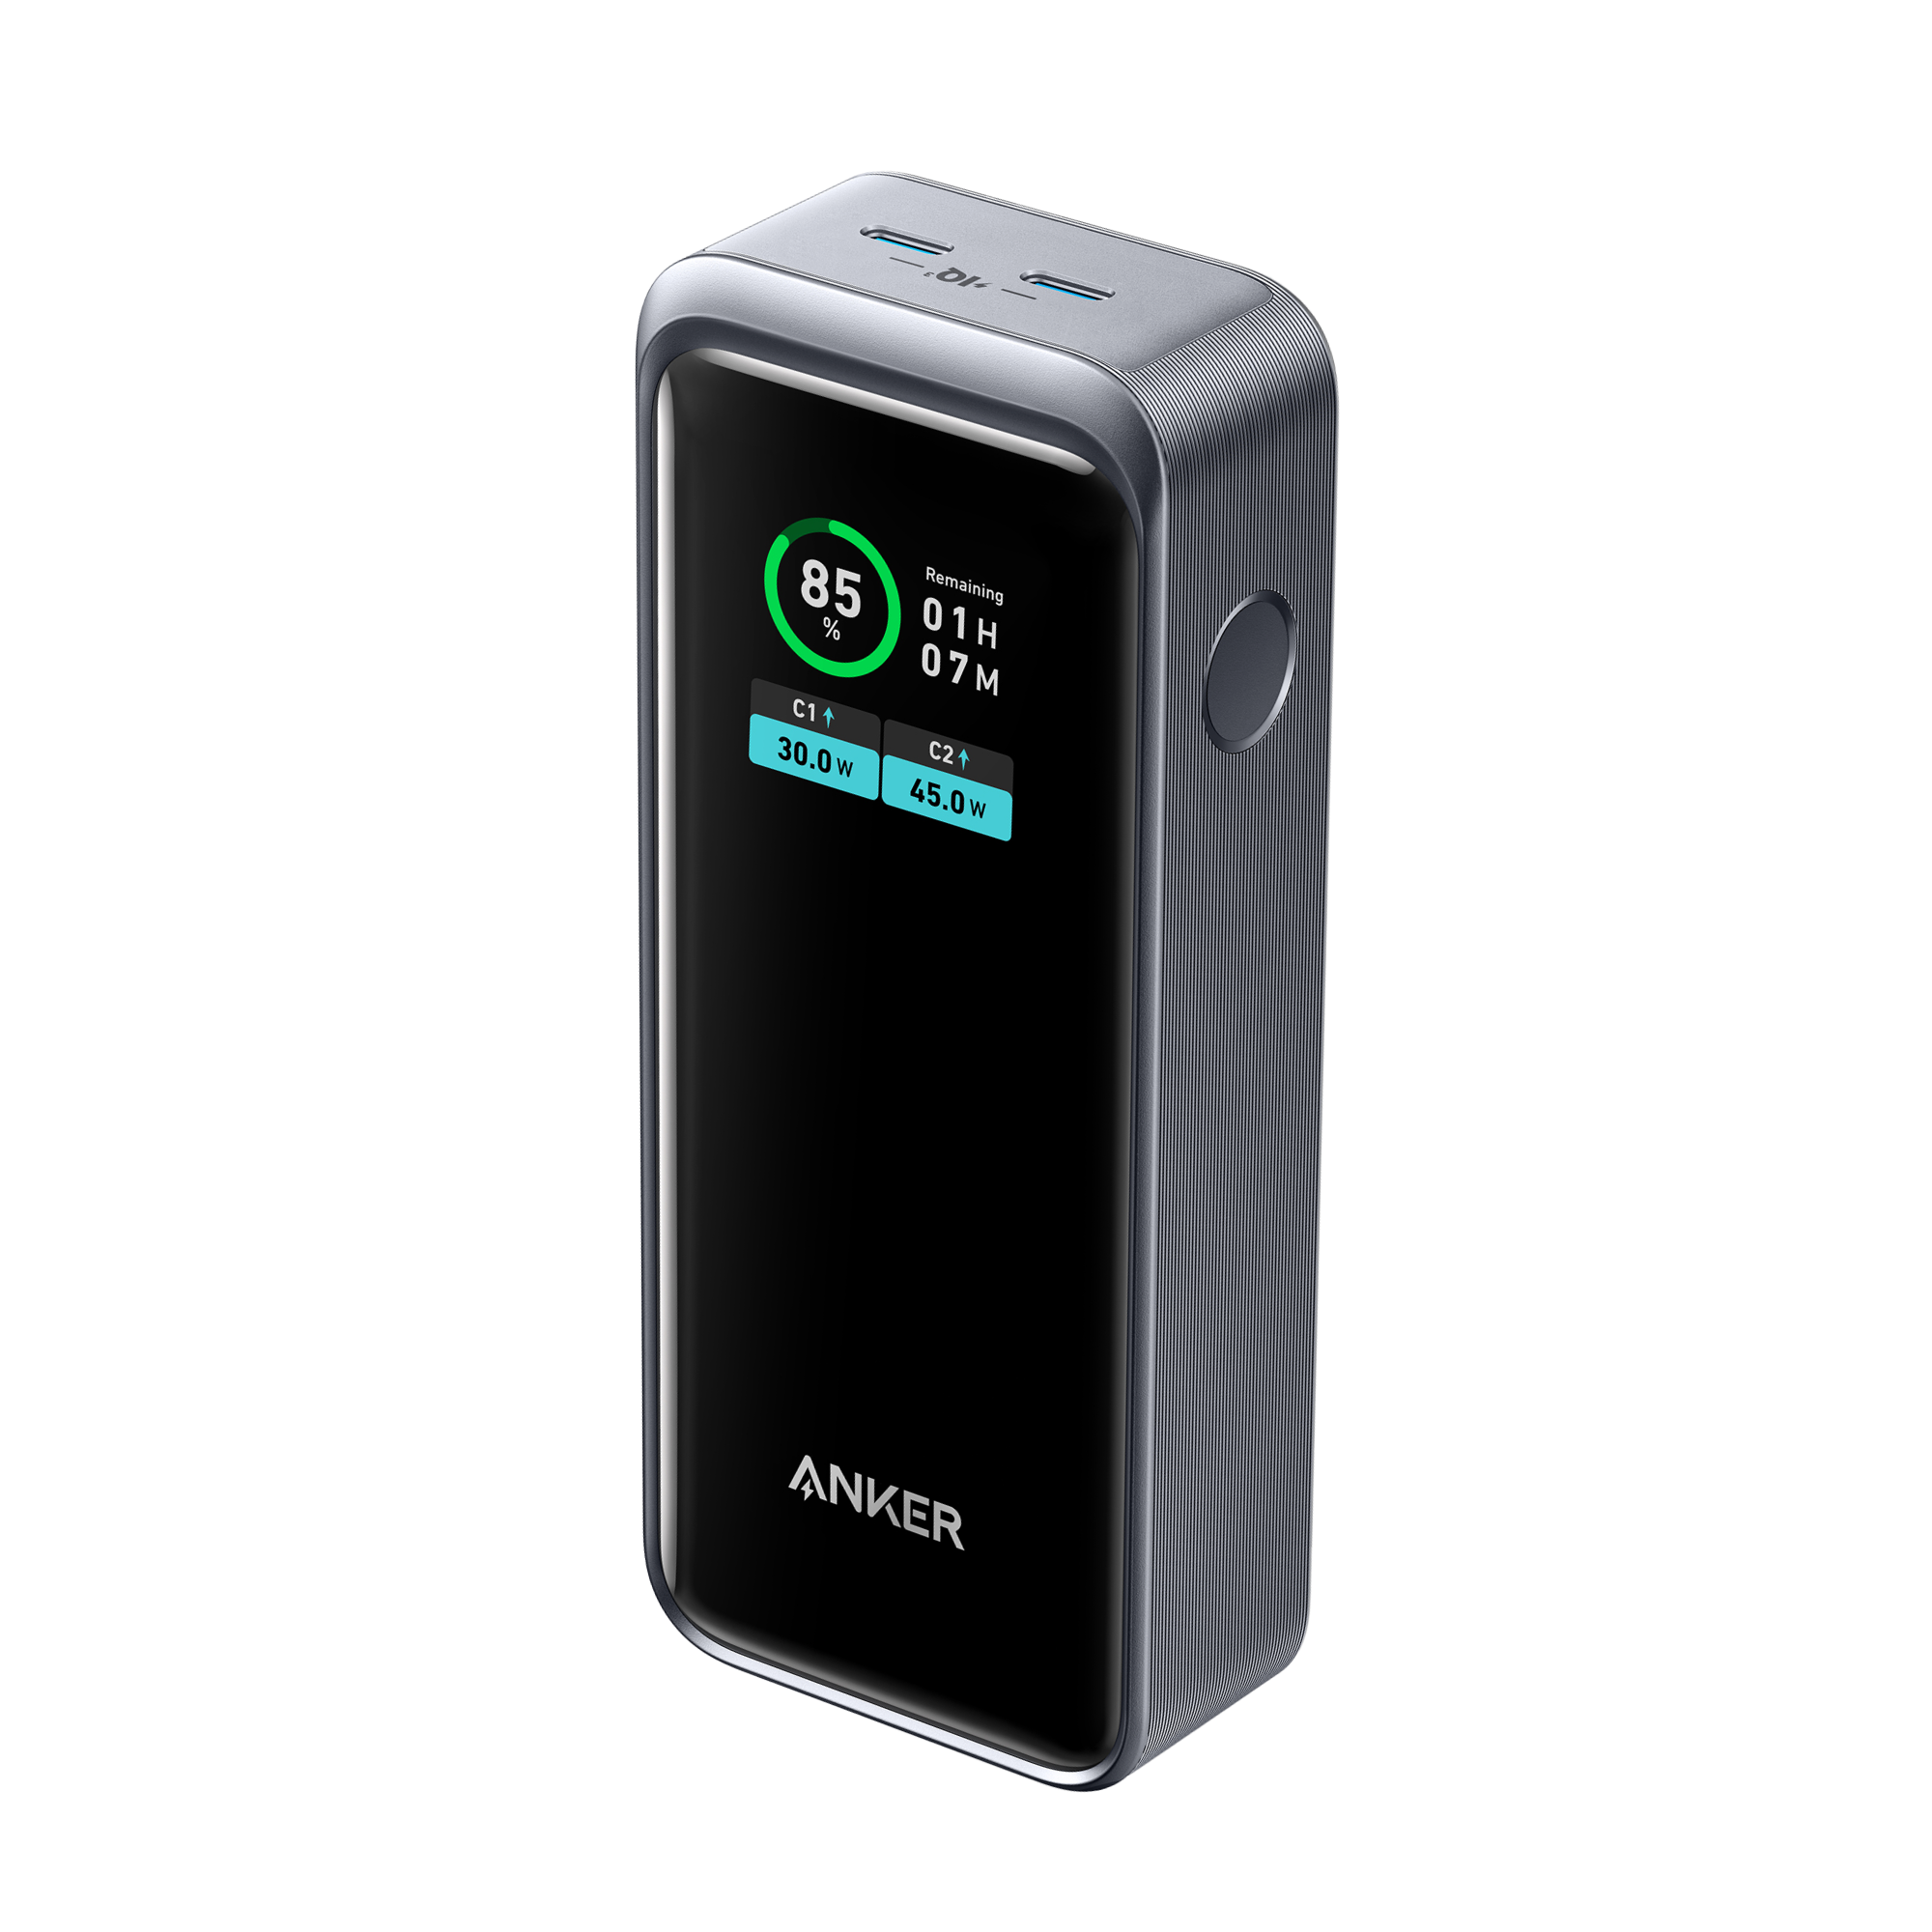 Anker Prime chargeur portable 2 ports 12 000 mAh